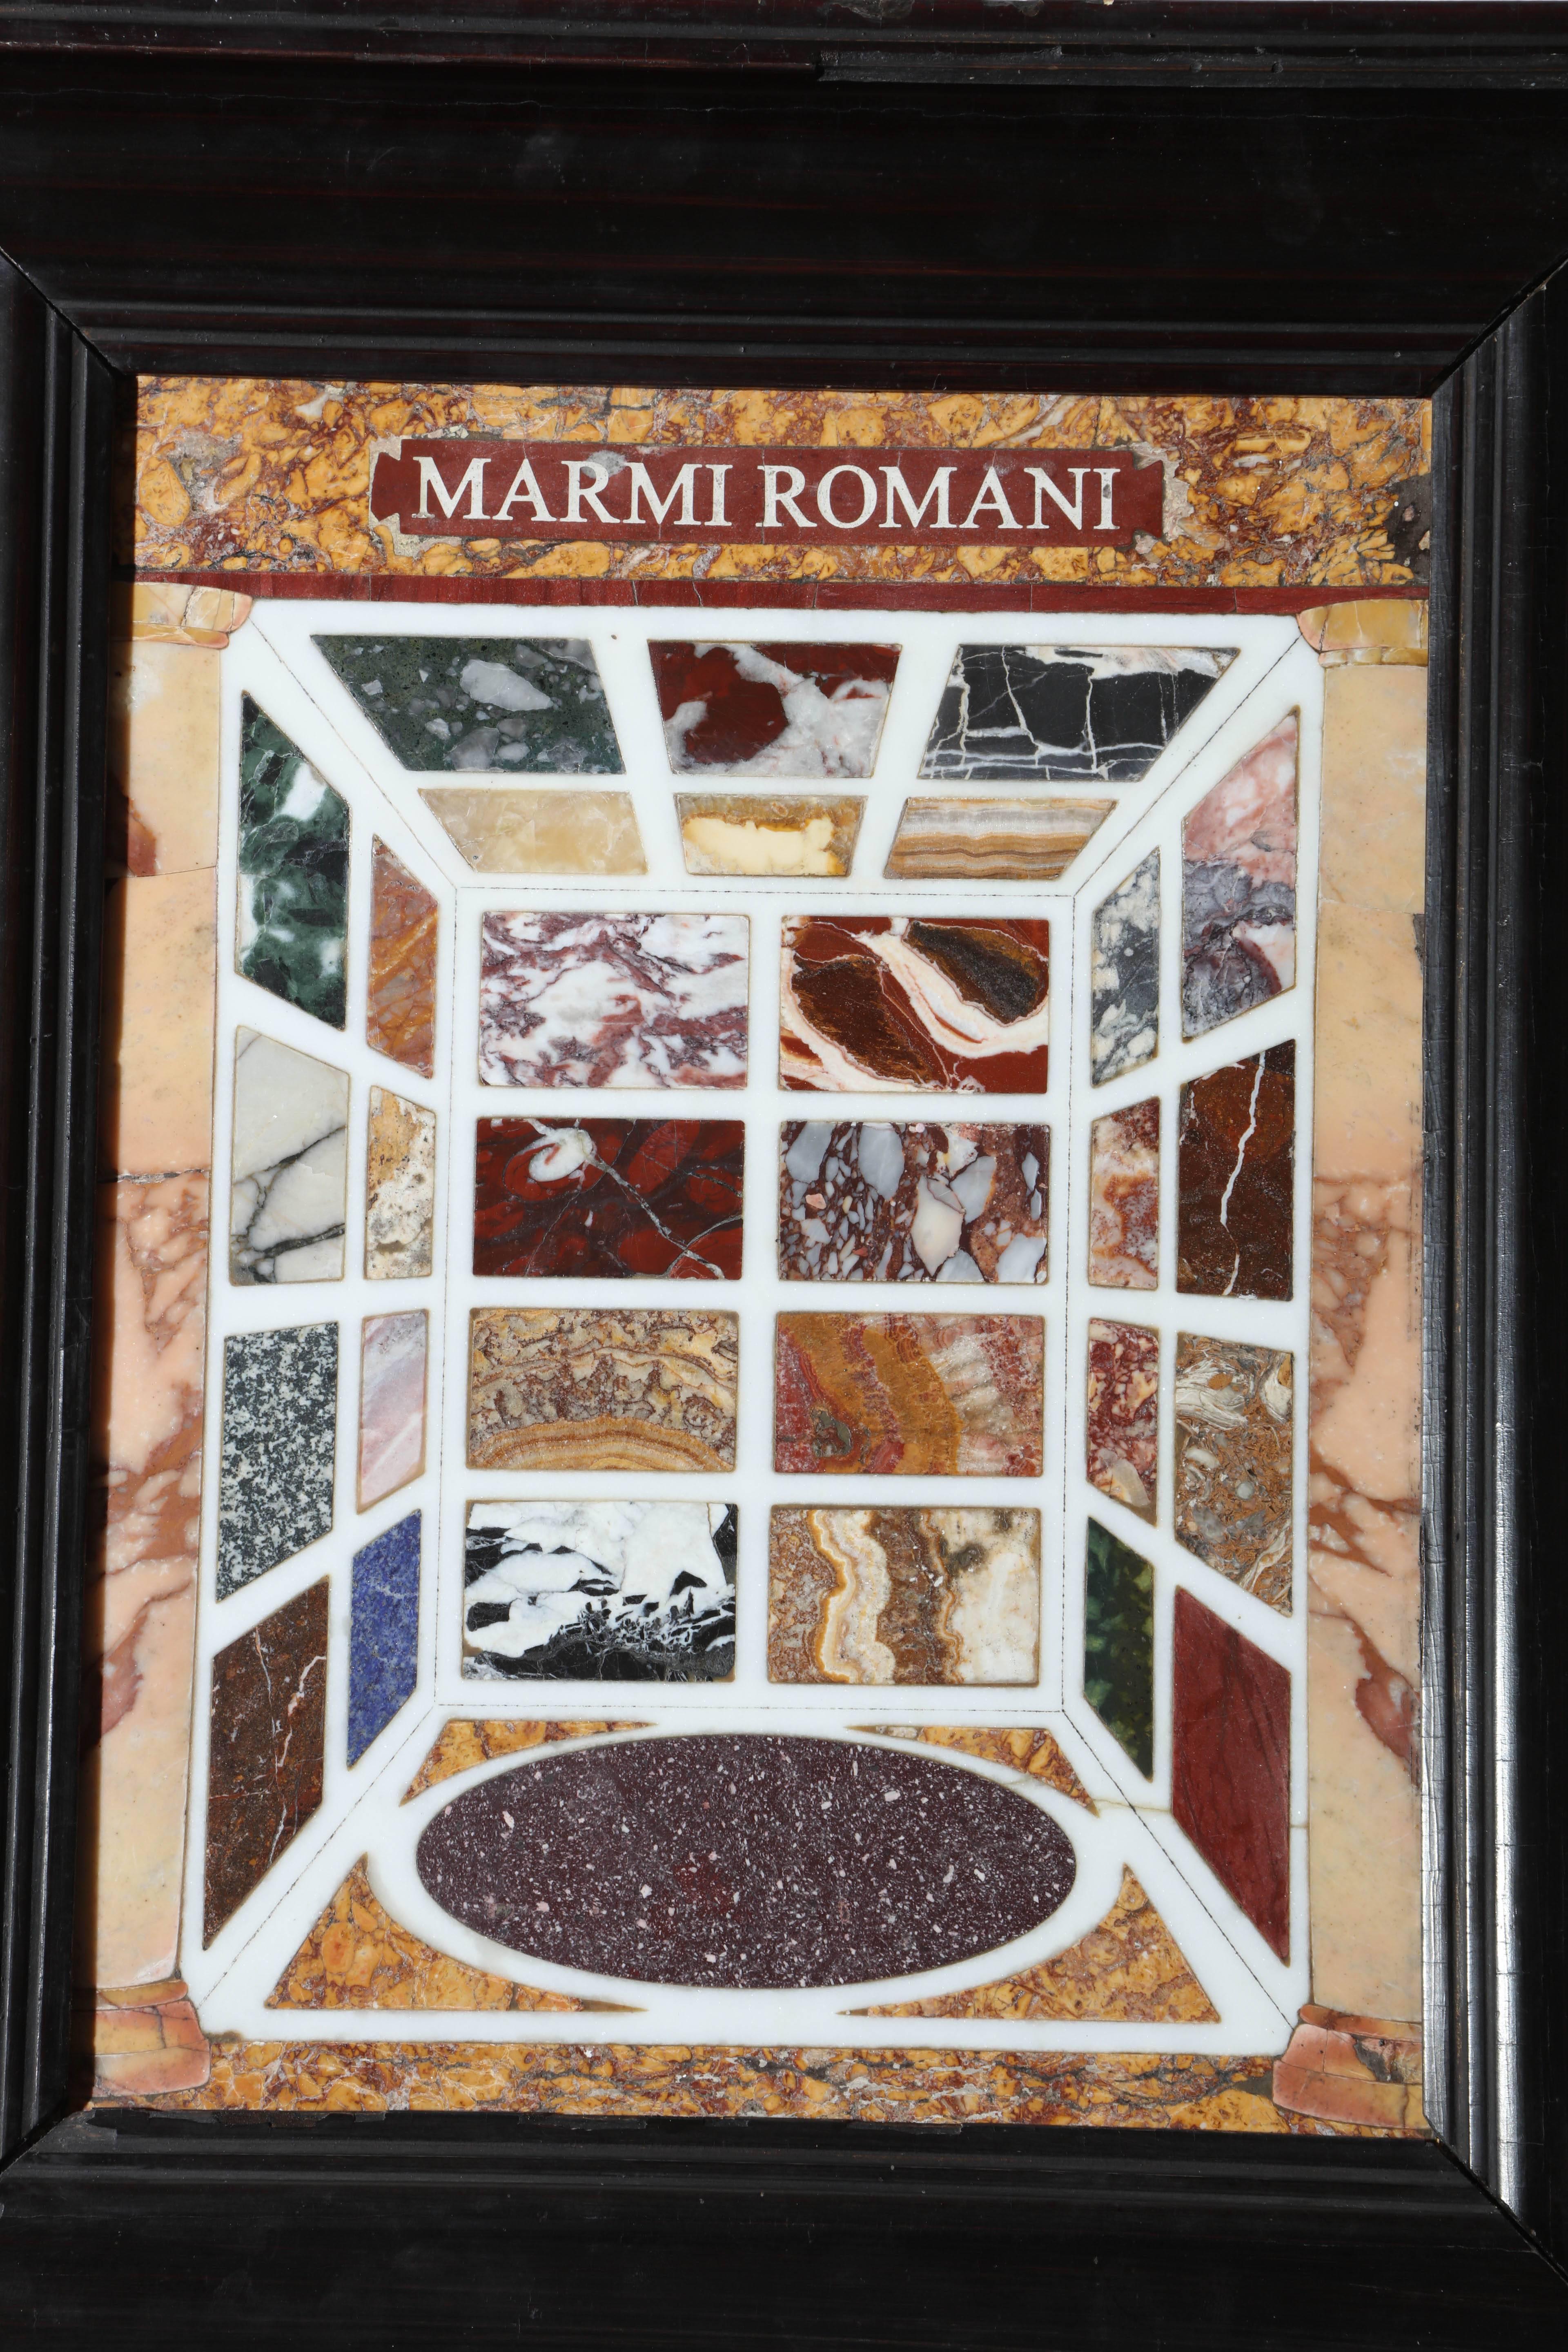 19th century unusual marble specimens used in Rome.